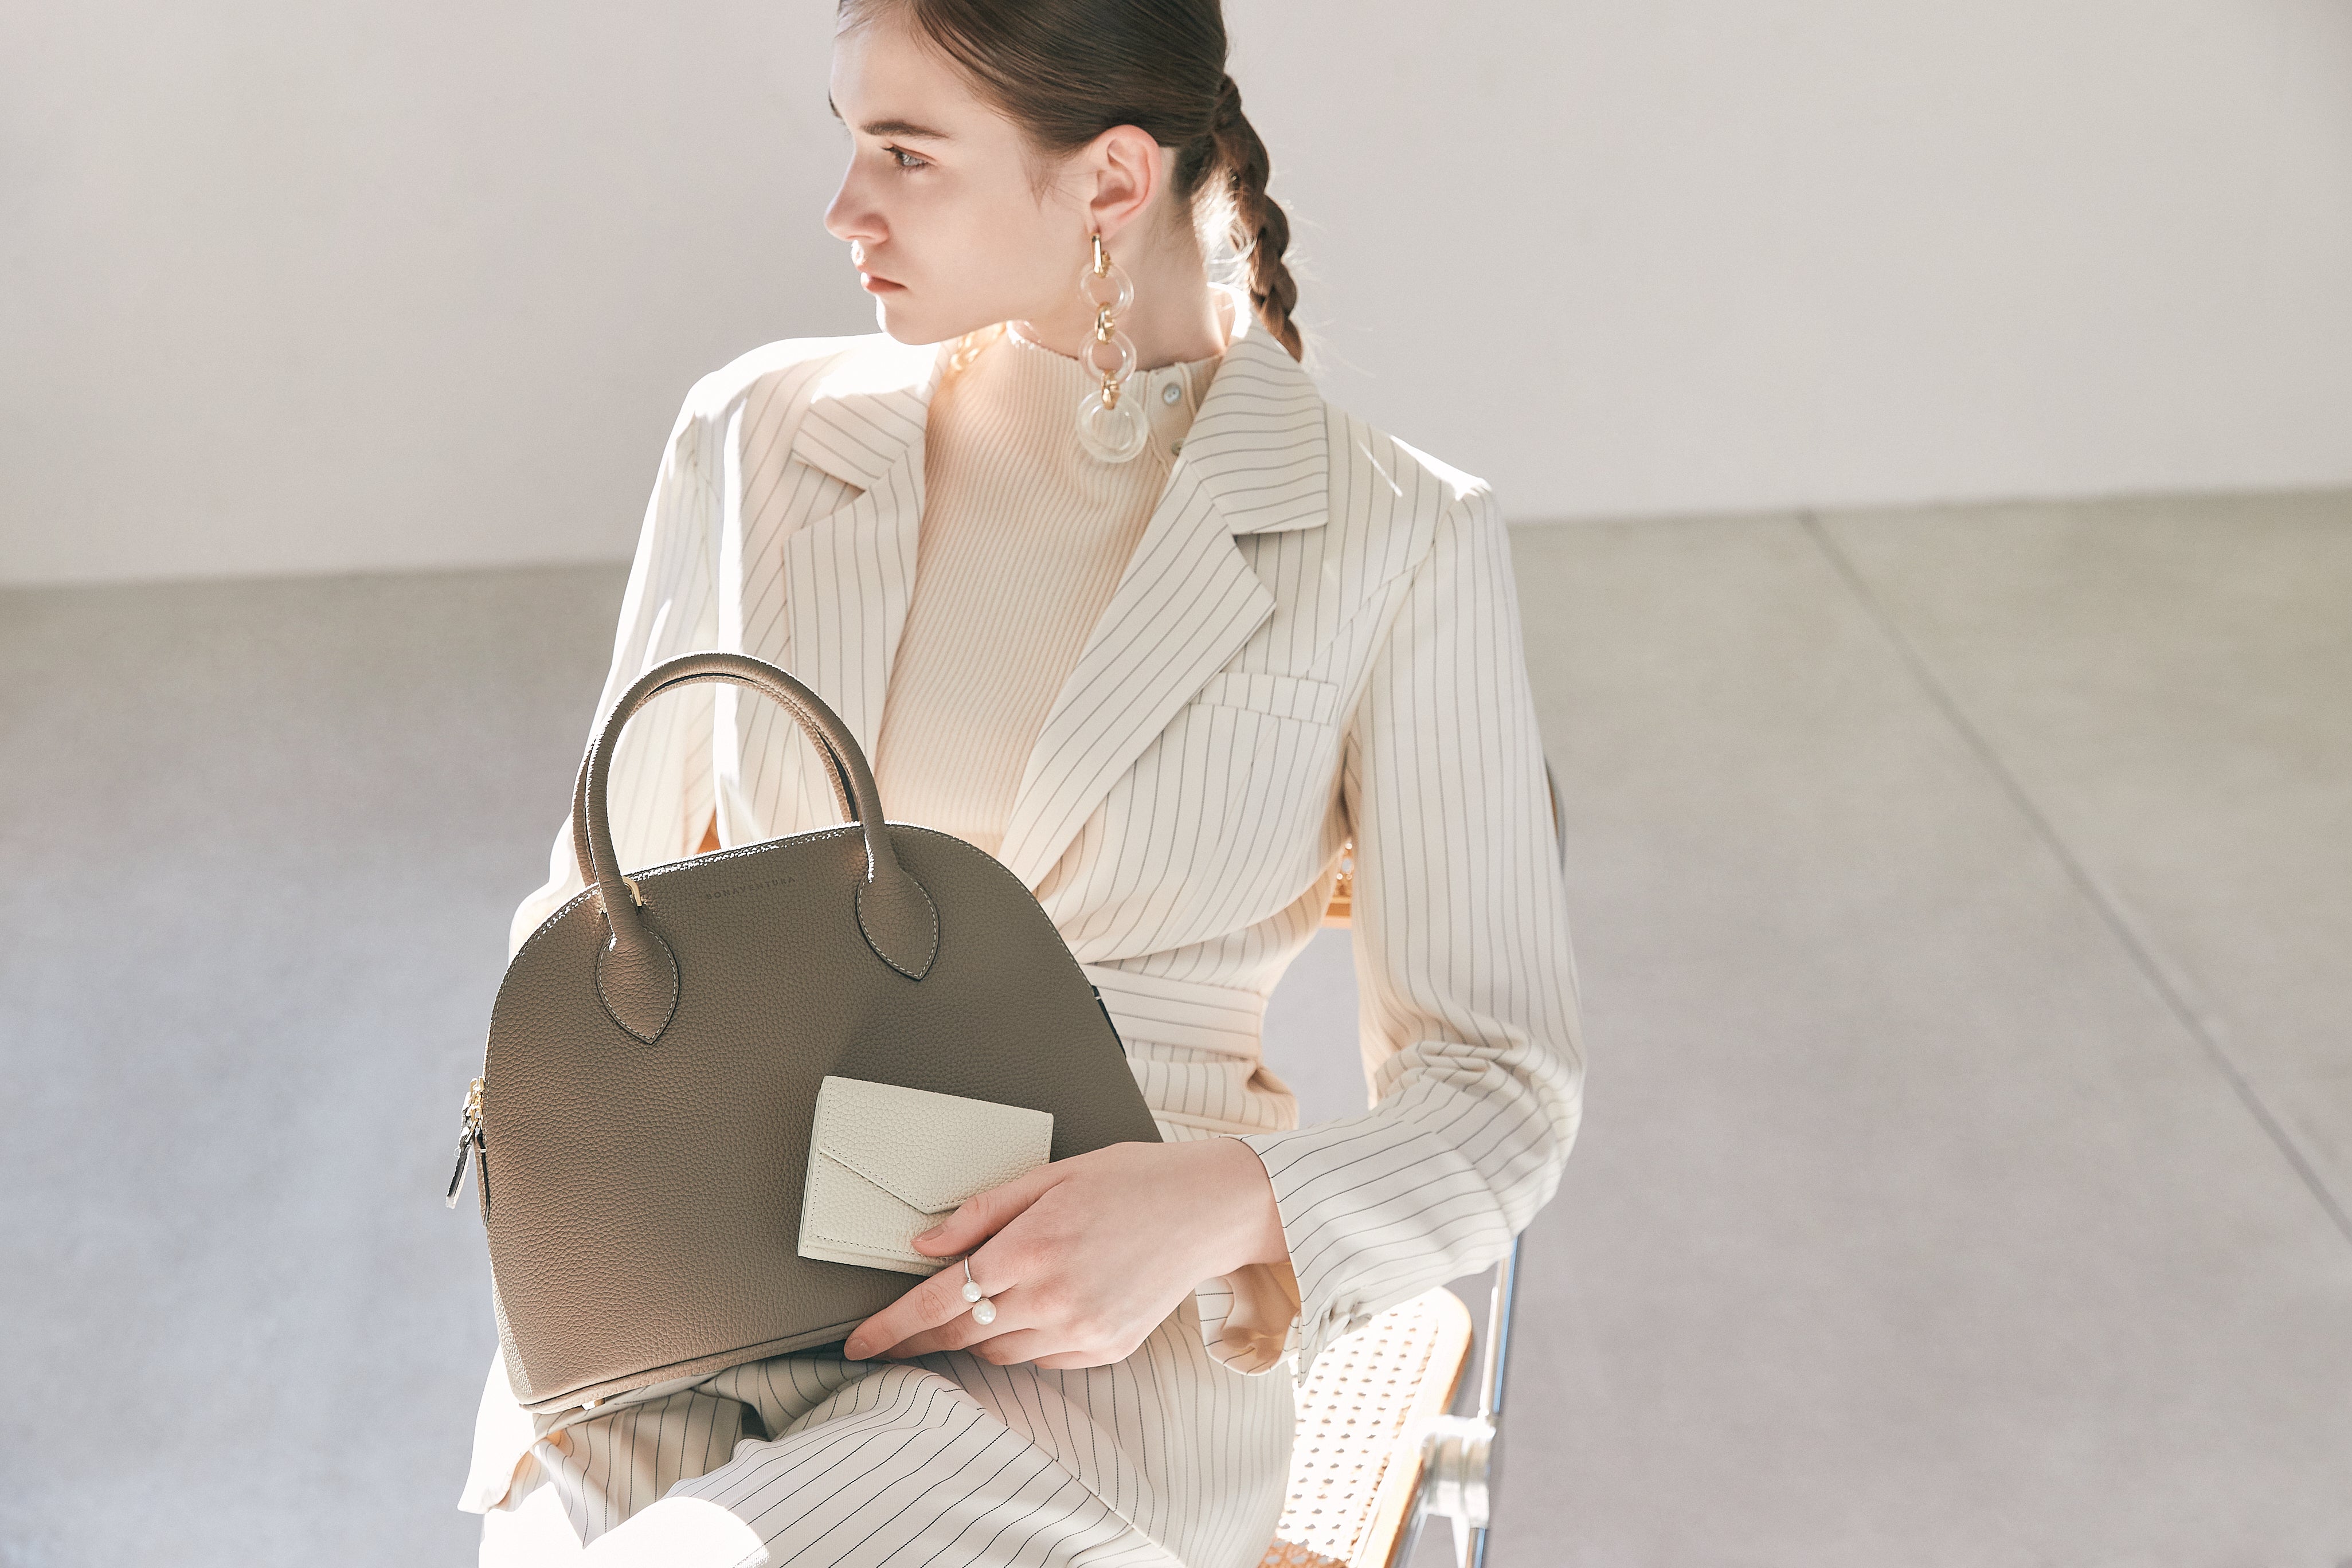 An elegant businesswoman carries a stylish leather handbag from BONAVENTURA